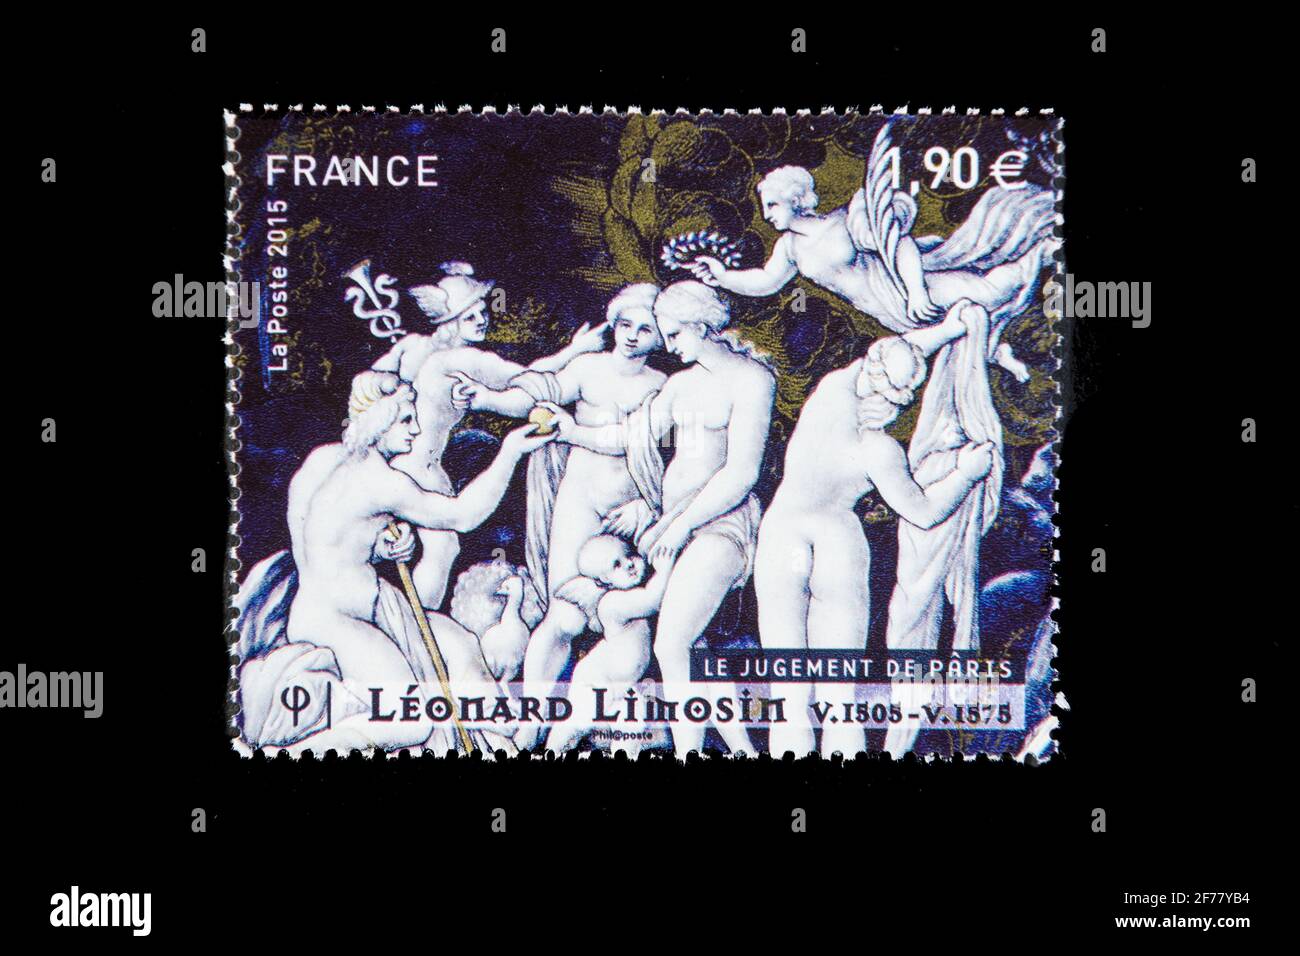 France, Paris, stamp Stock Photo